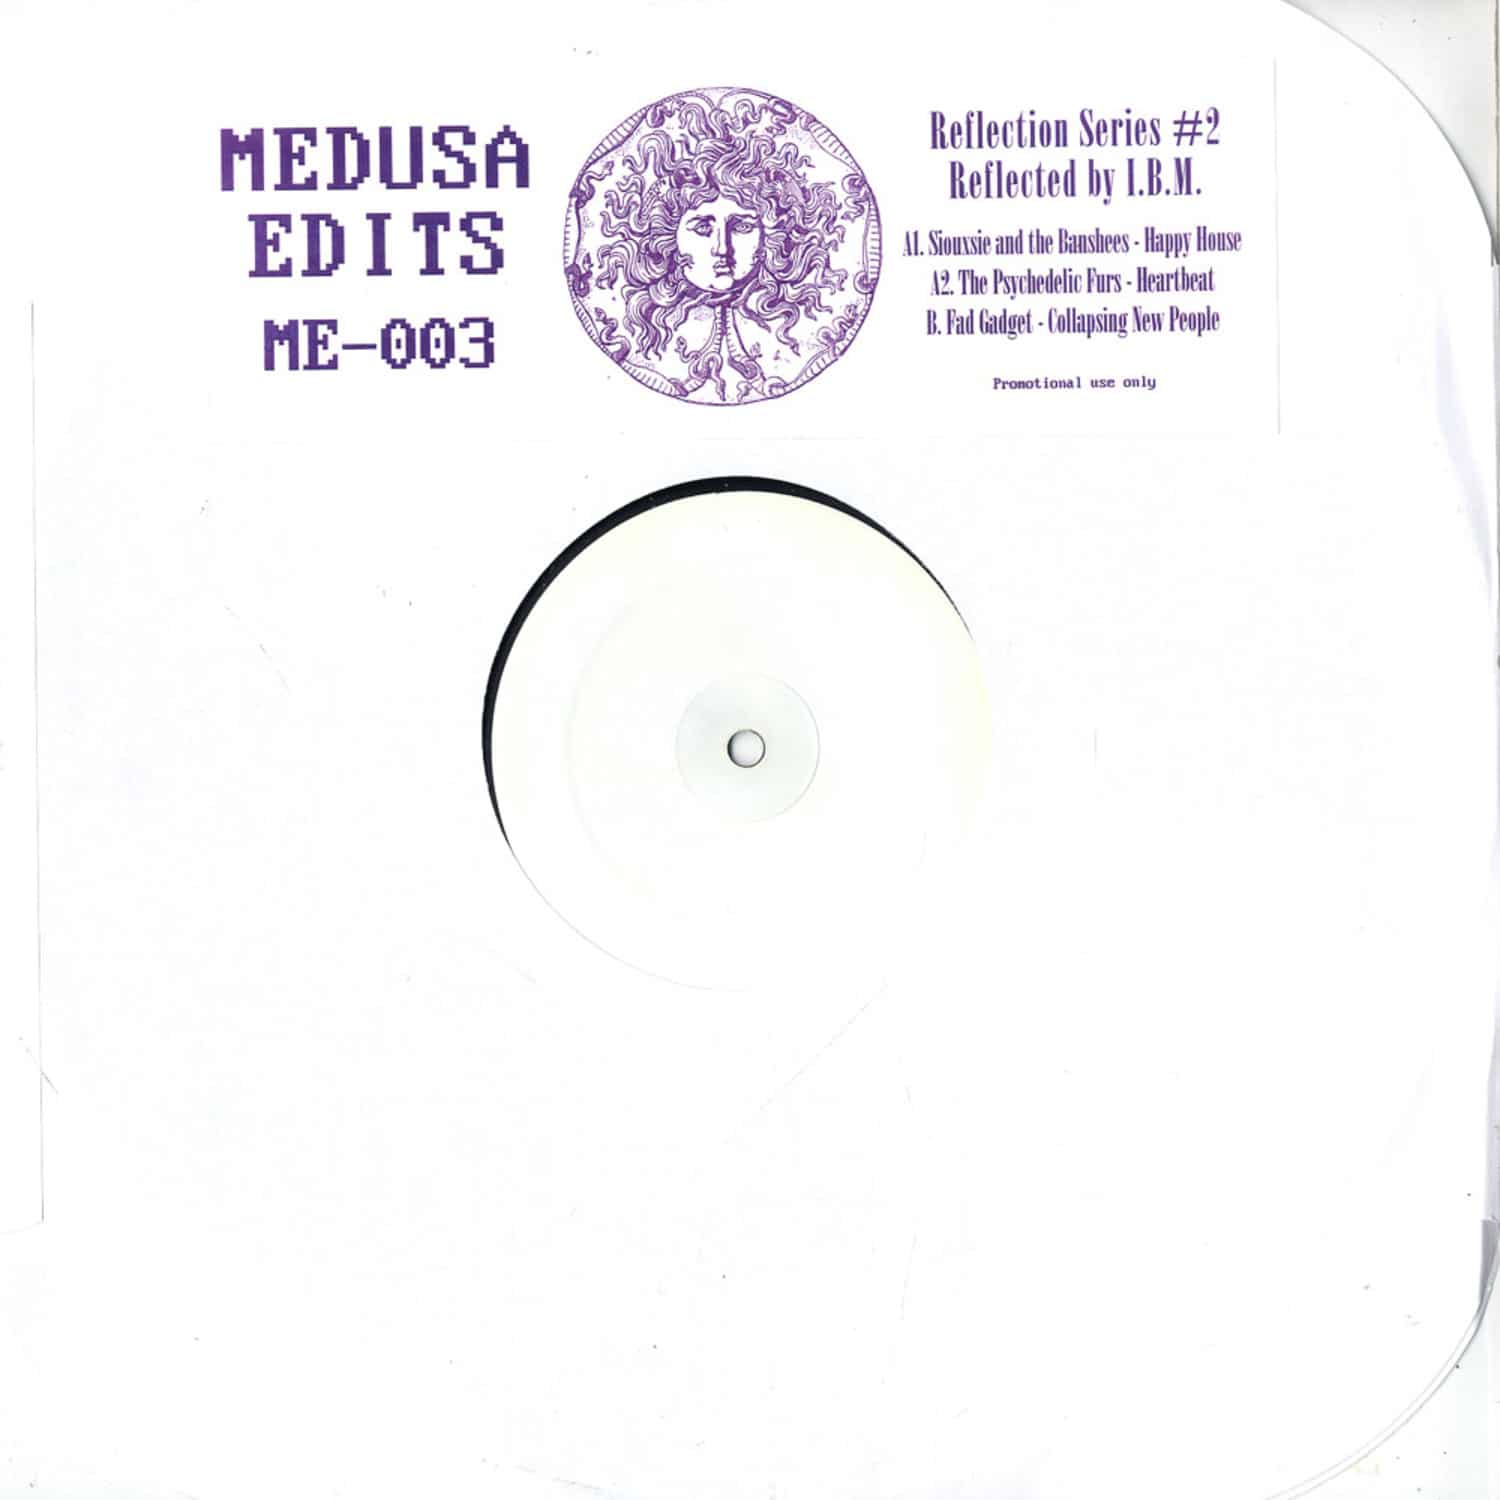 Medusa Edits - REFLECTION SERIES 3